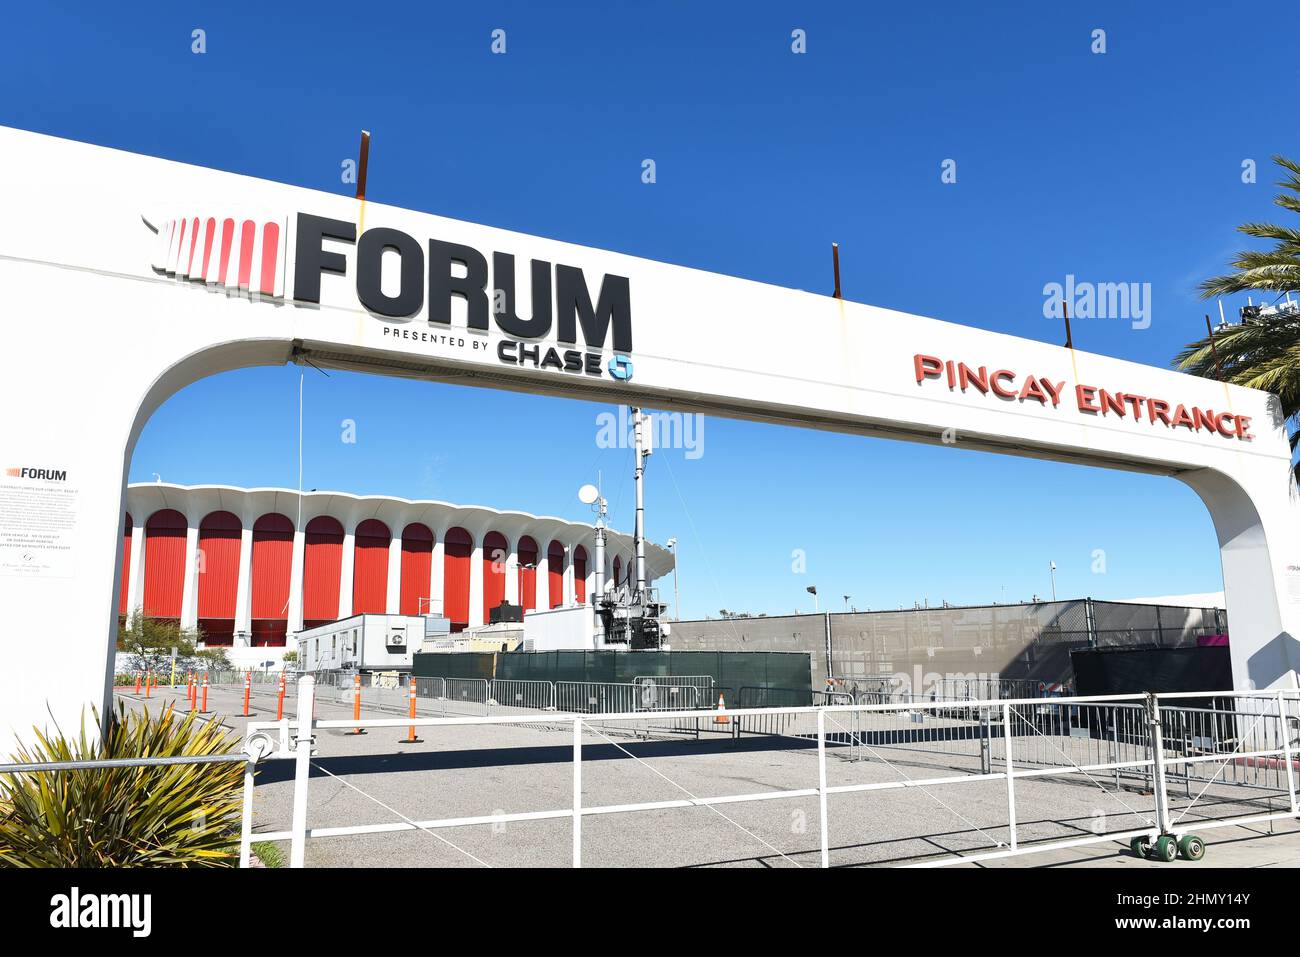 INGLEWOOD, CALIFORNIA - 12 FEB 2022: The Pincay Entrance to The Forum arena Stock Photo